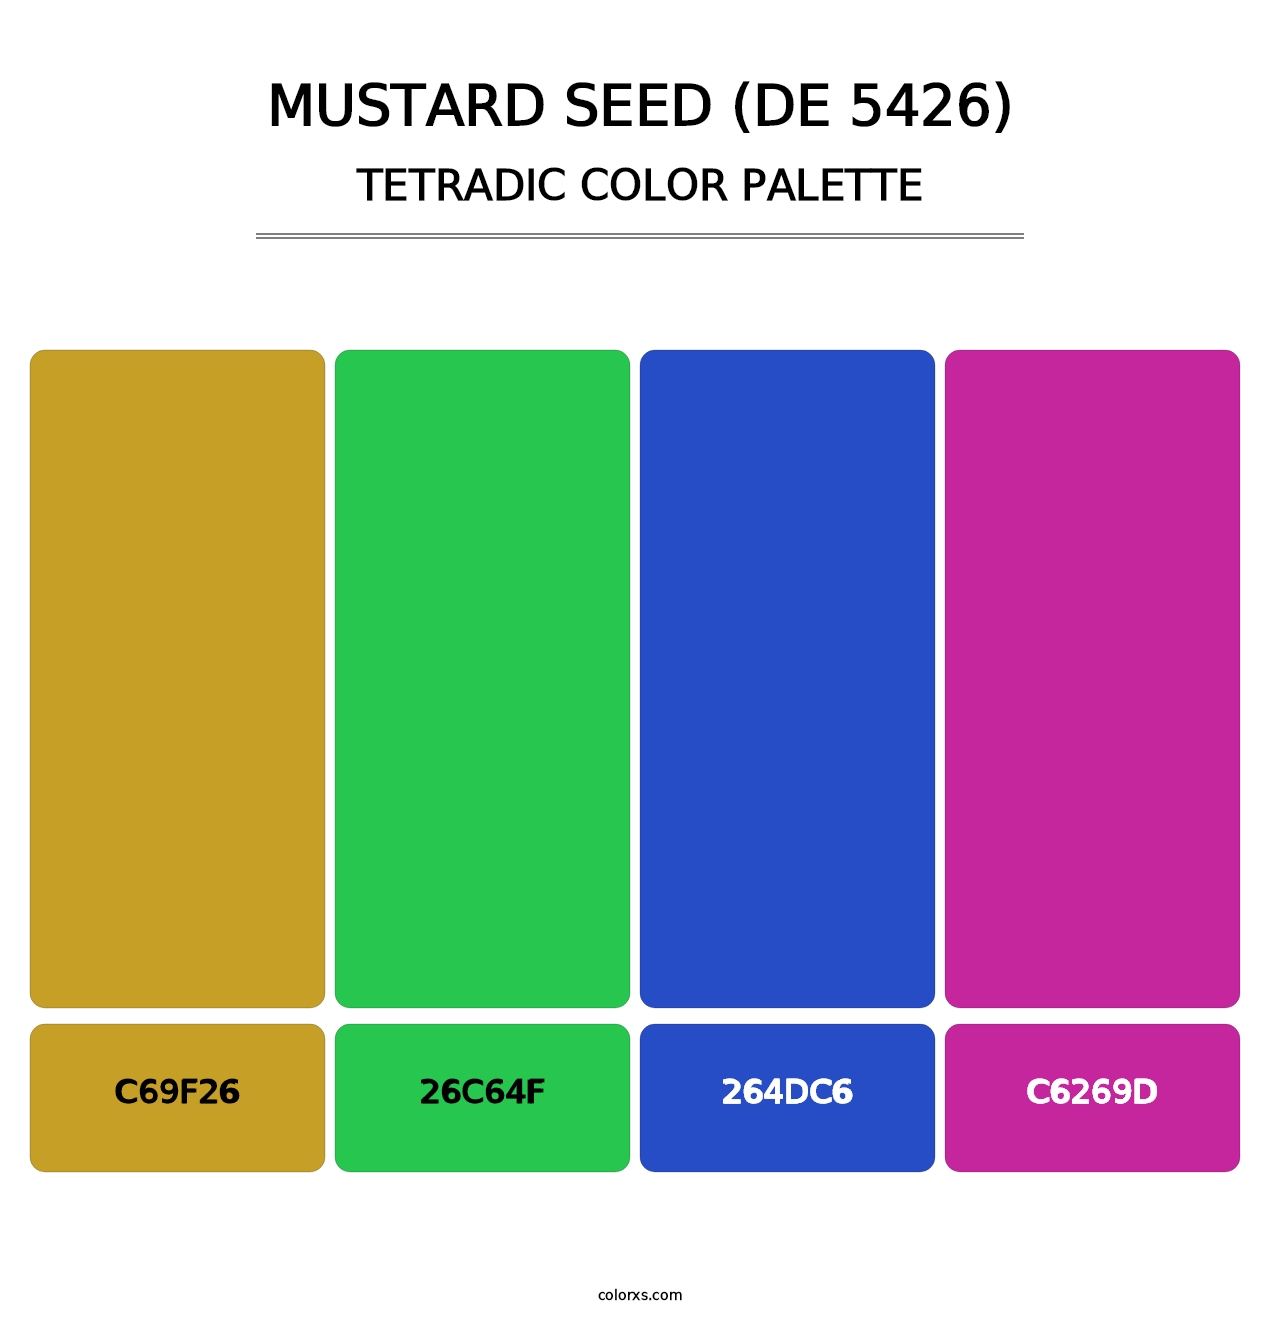 Mustard Seed (DE 5426) - Tetradic Color Palette